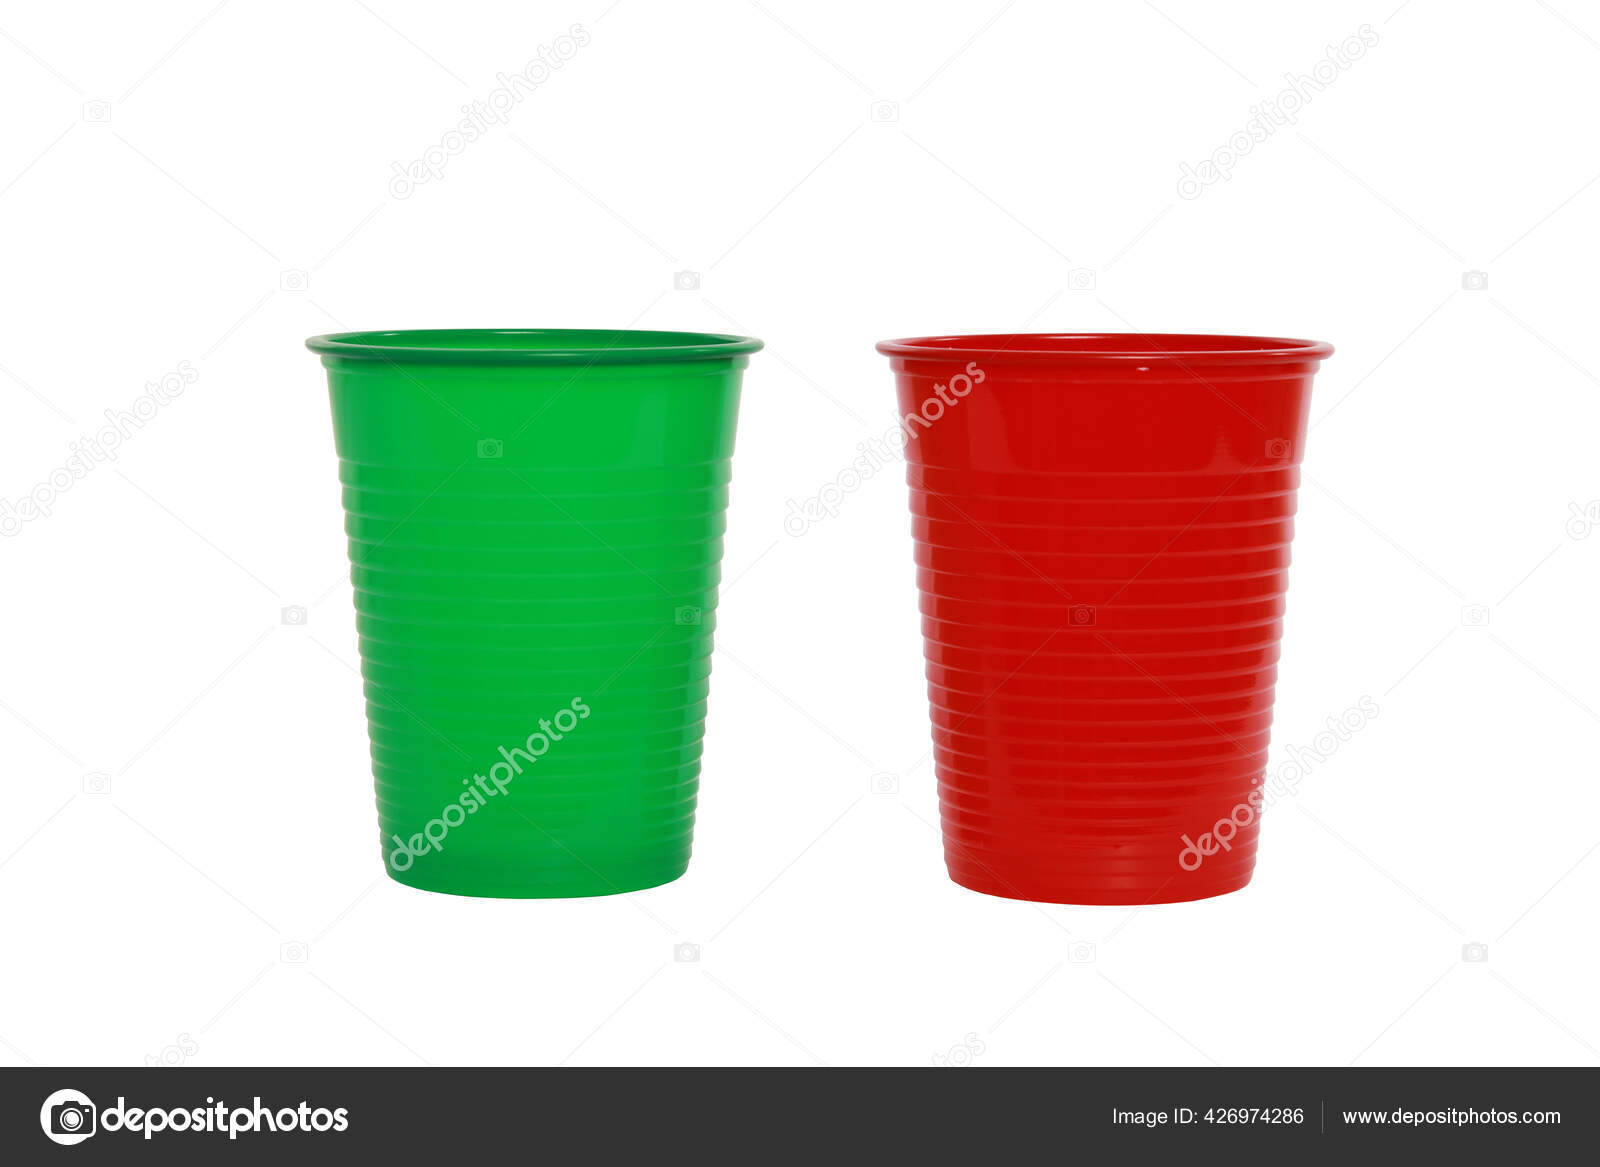 https://st2.depositphotos.com/27201292/42697/i/1600/depositphotos_426974286-stock-photo-two-green-red-plastic-cups.jpg